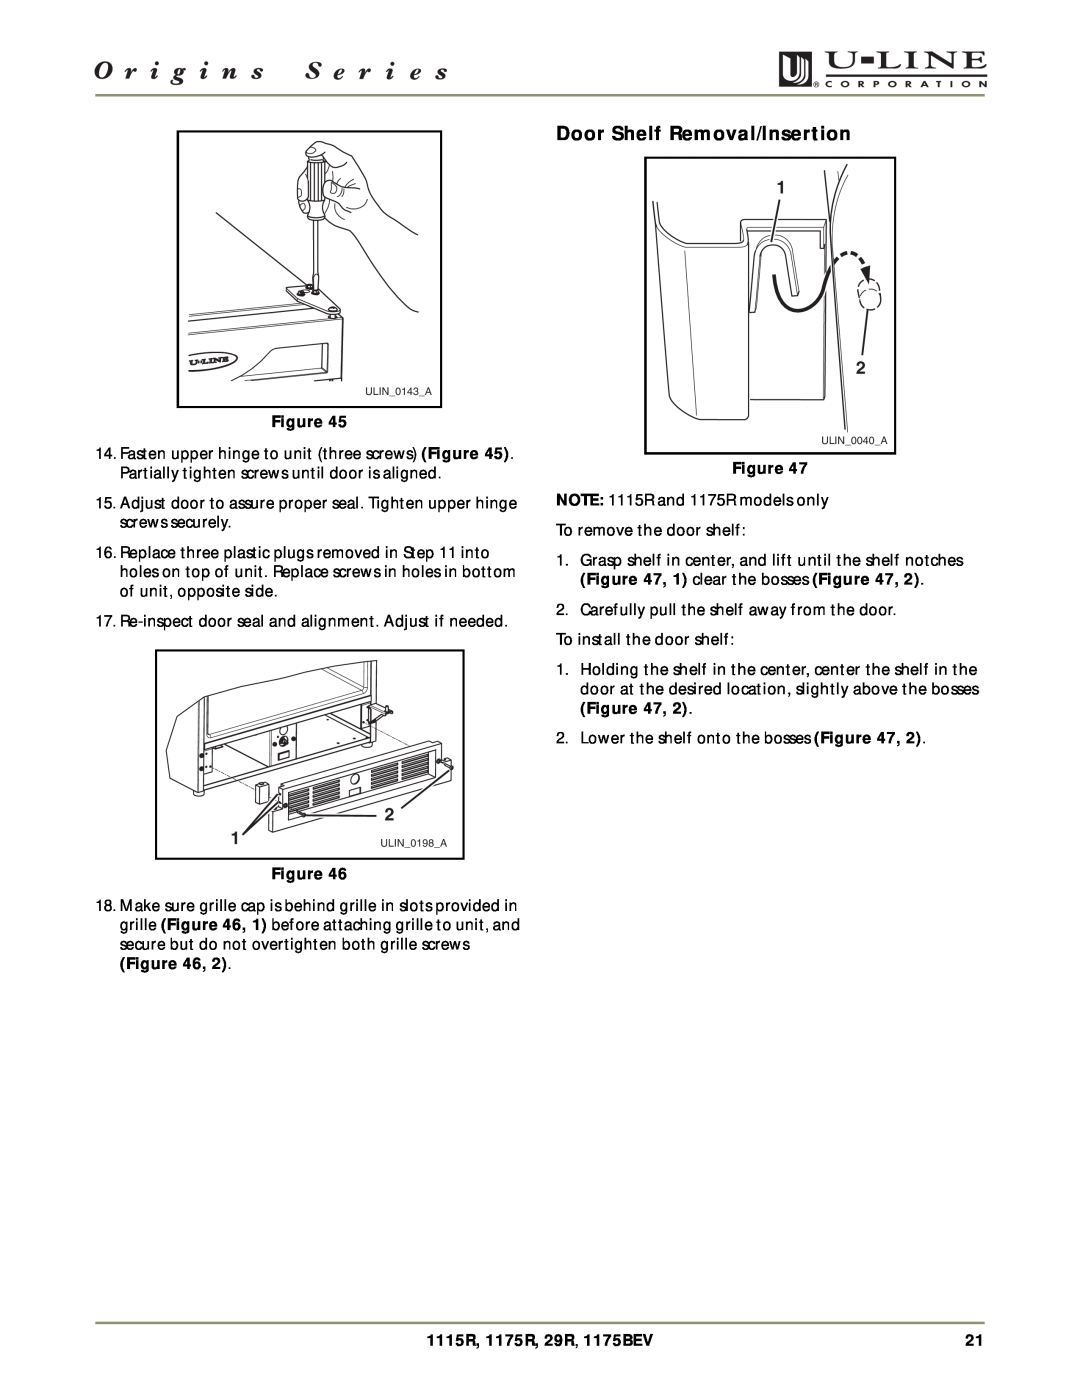 U-Line manual Door Shelf Removal/Insertion, 1115R, 1175R, 29R, 1175BEV 